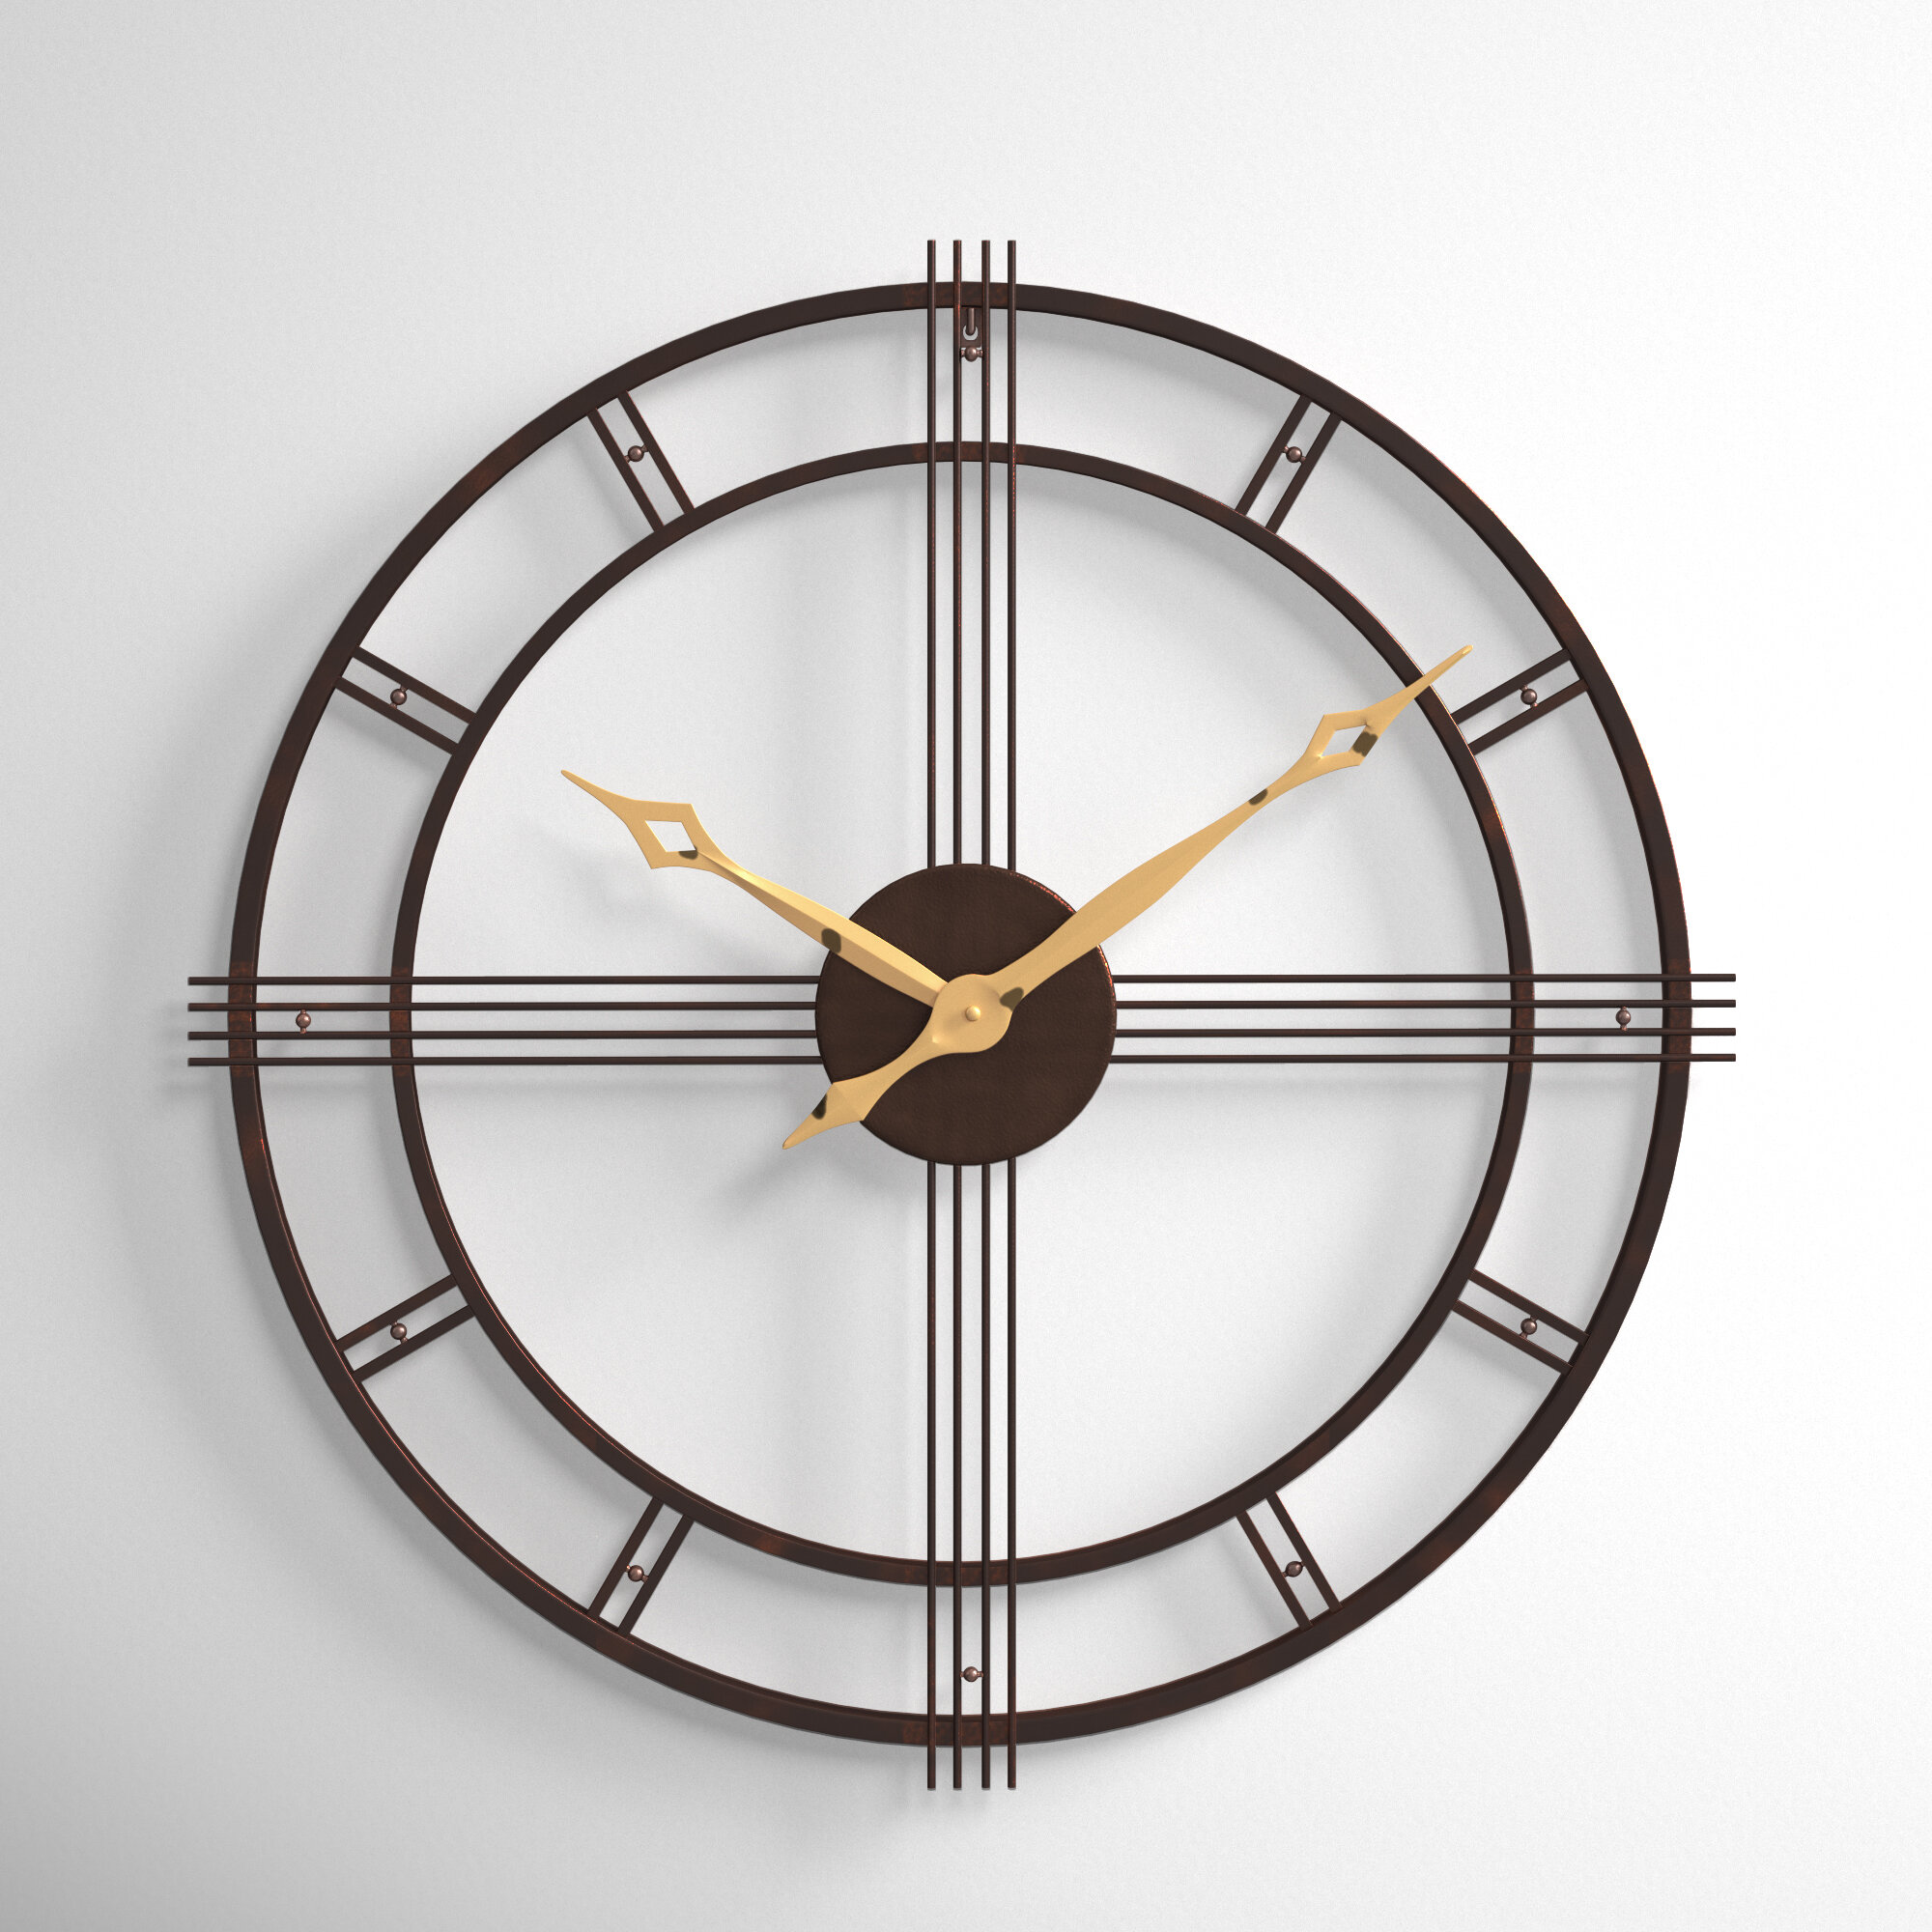 Full Scenic European Styles Wall Clock Rolled-Up Canvas Method Decorative Clocks 